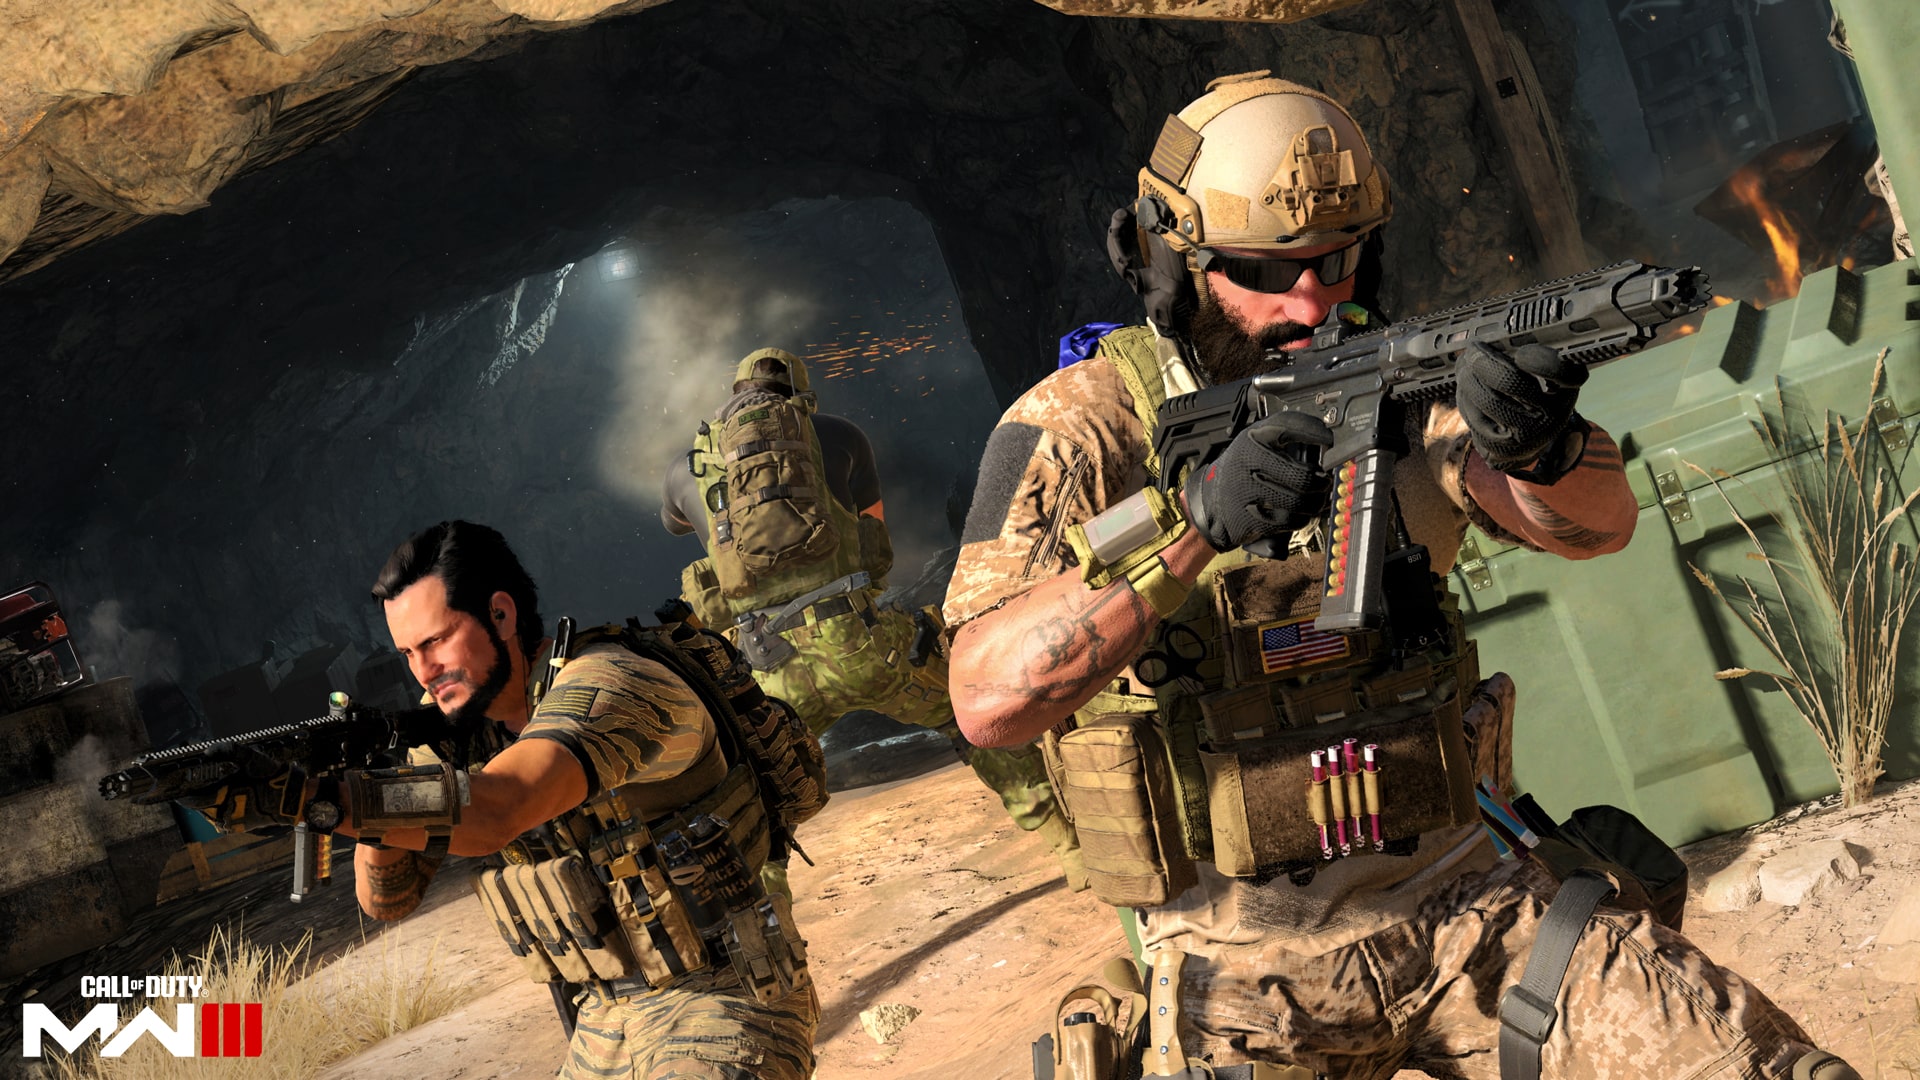 Call of Duty: Modern Warfare 3 Update 1.37